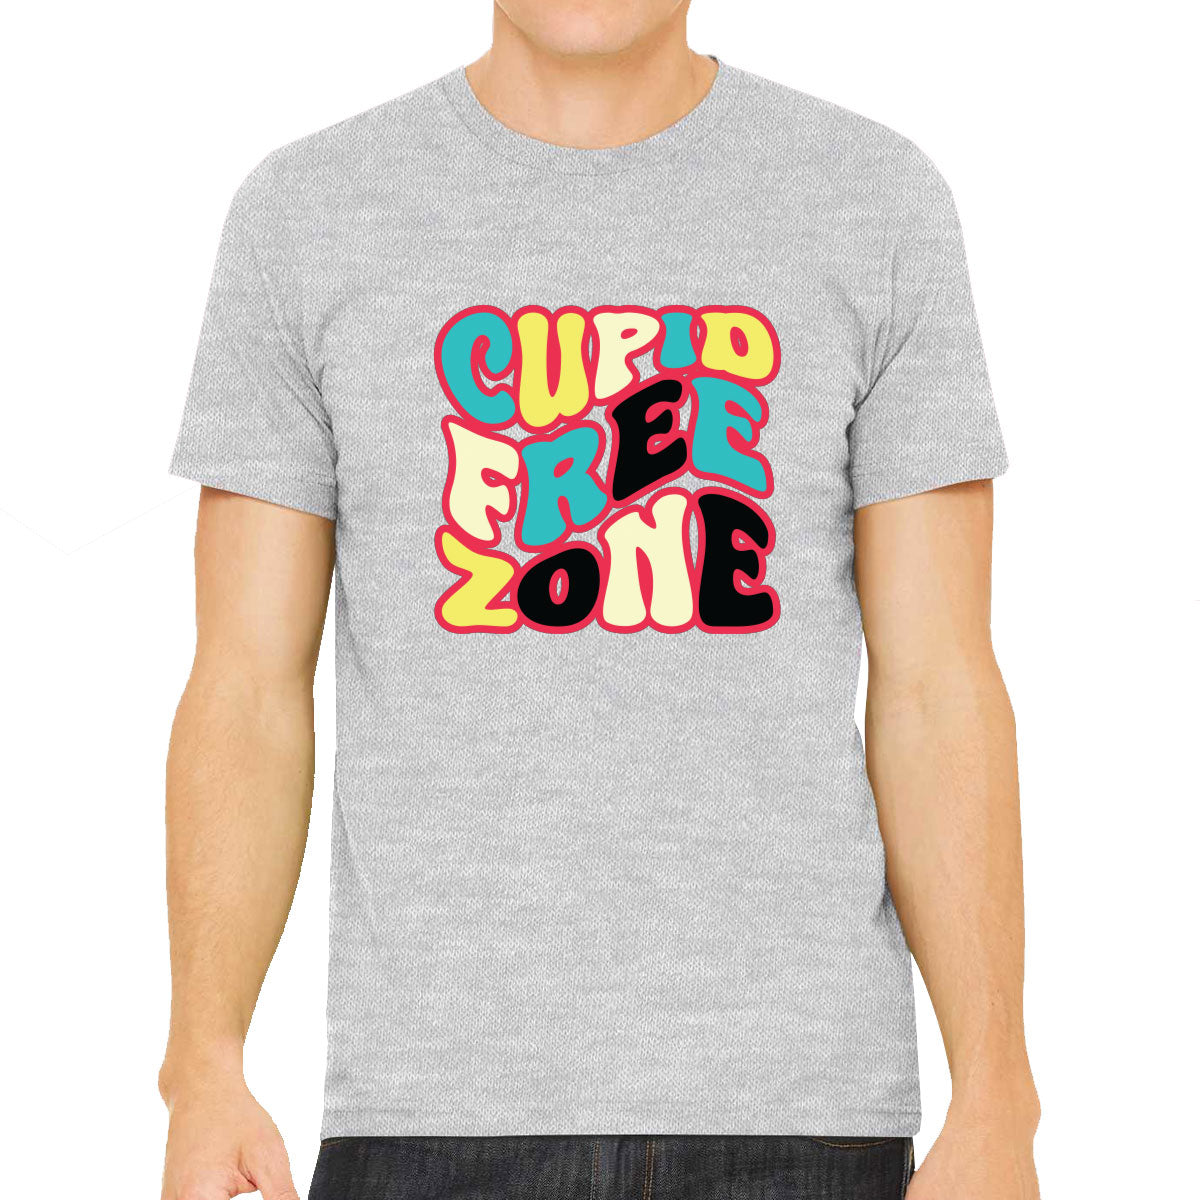 Cupid Free Zone Men's T-shirt